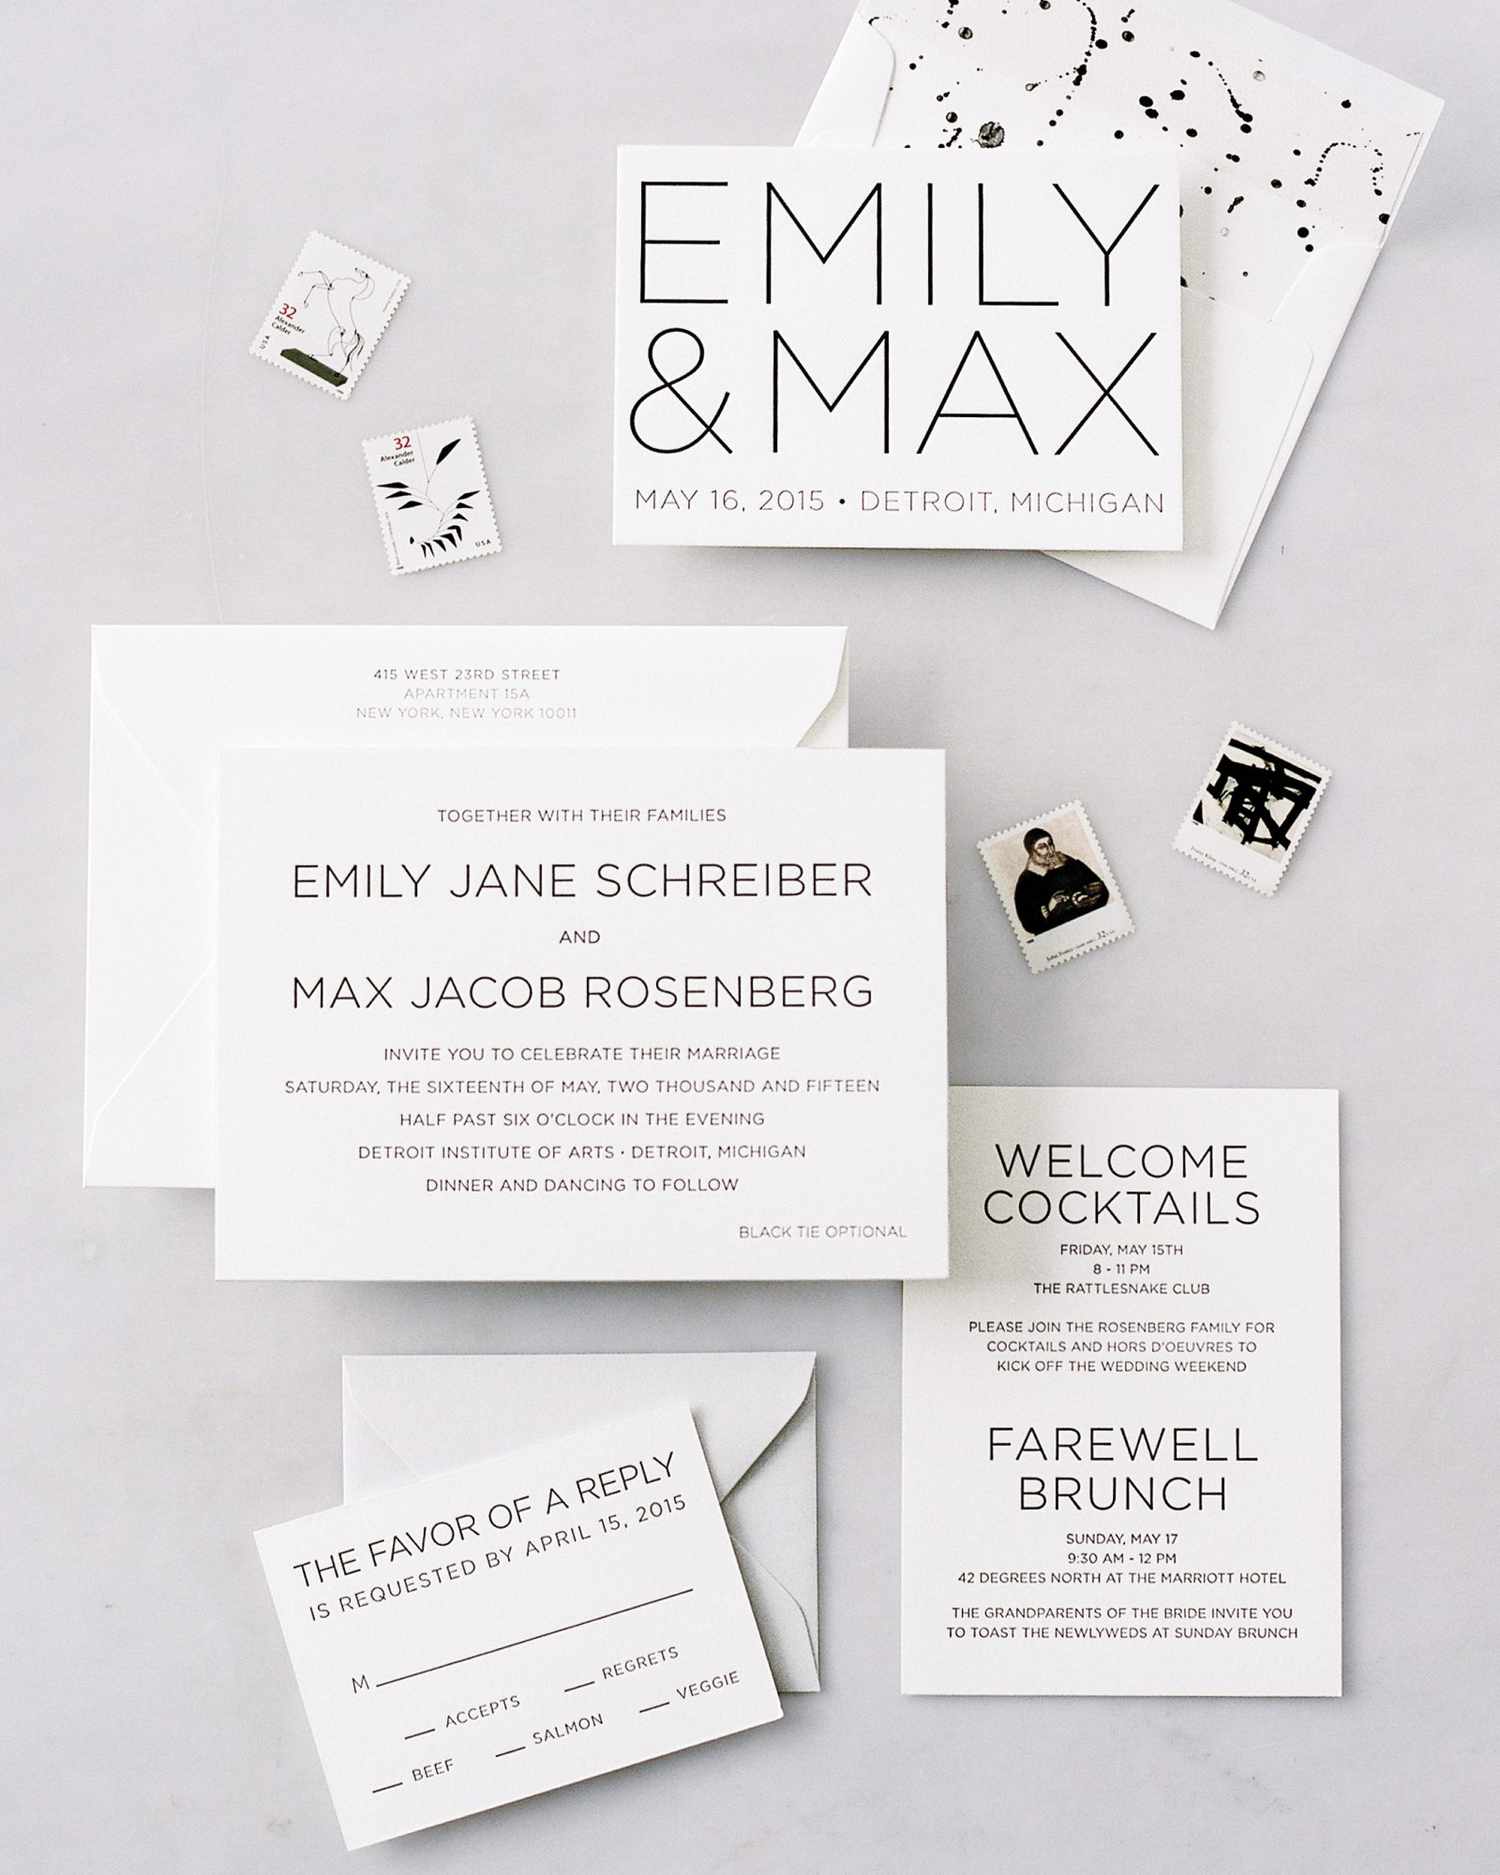 emily-max-wedding-michigan-invitation-001-s112396.jpg